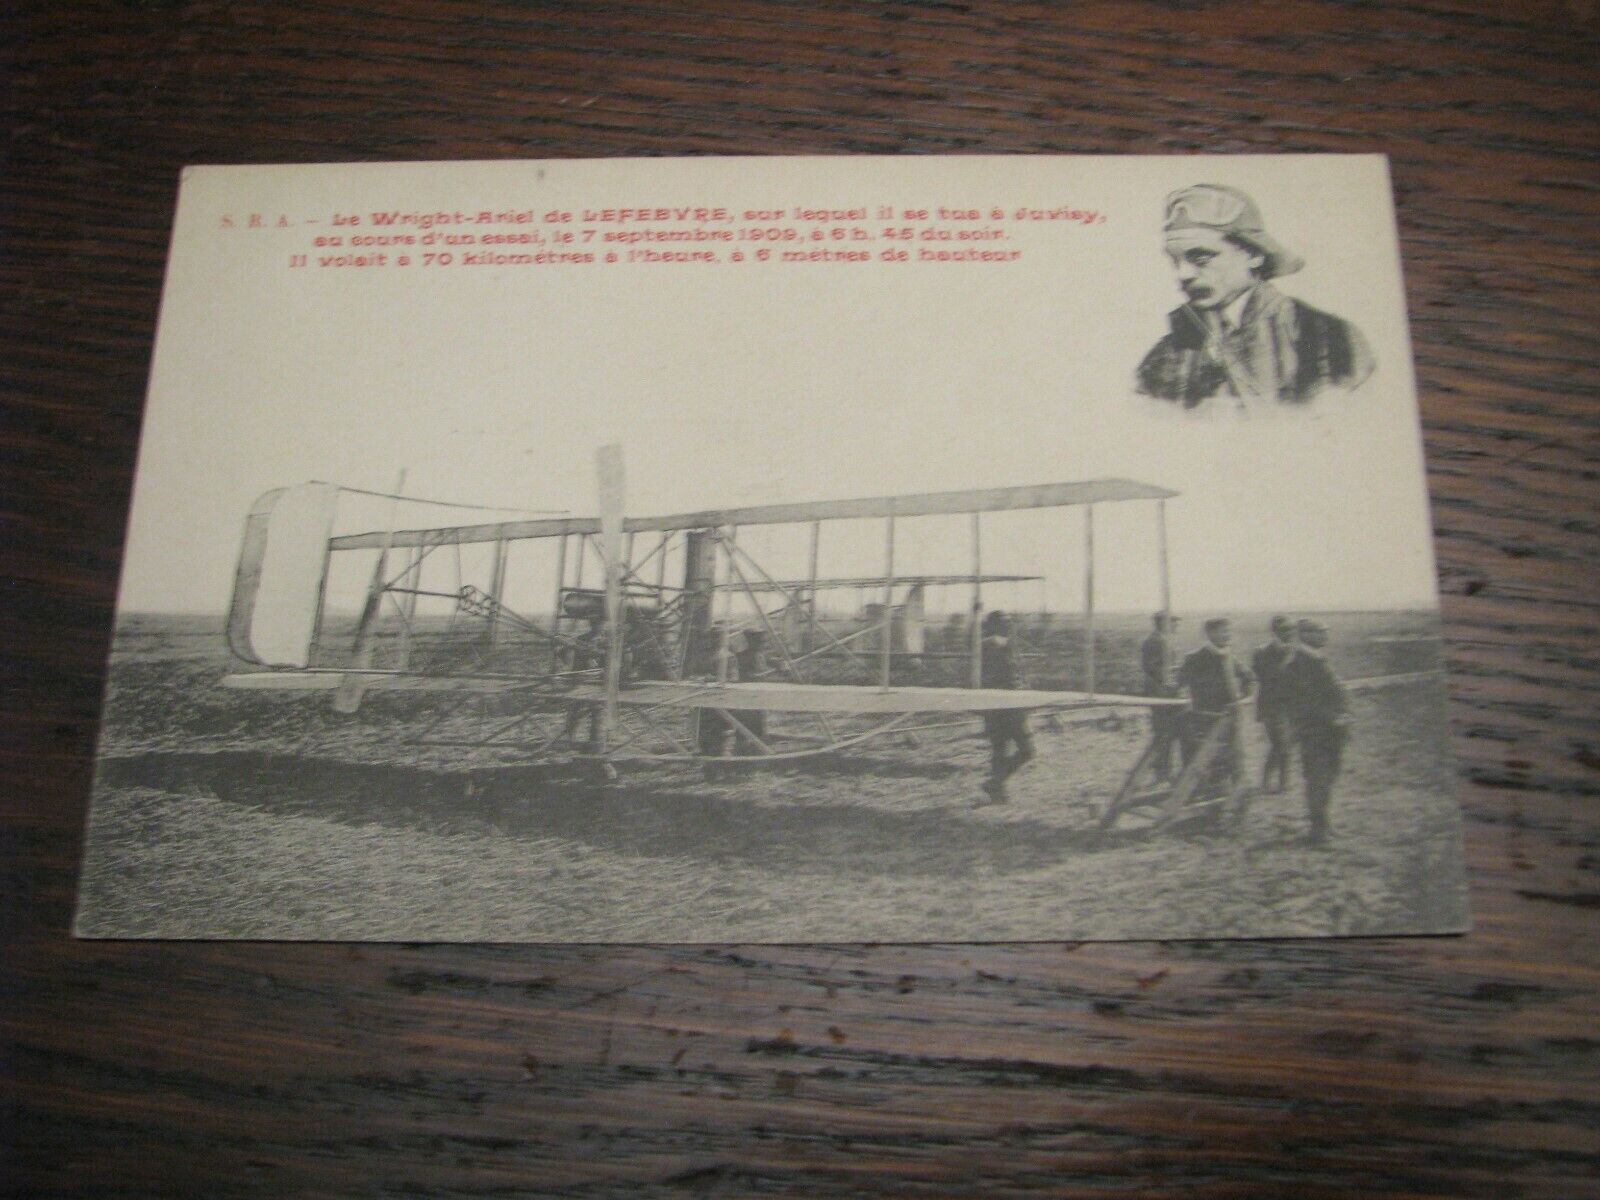 Aviation Postcard French France LeFebvre Wright Ariel Airplane September 1909